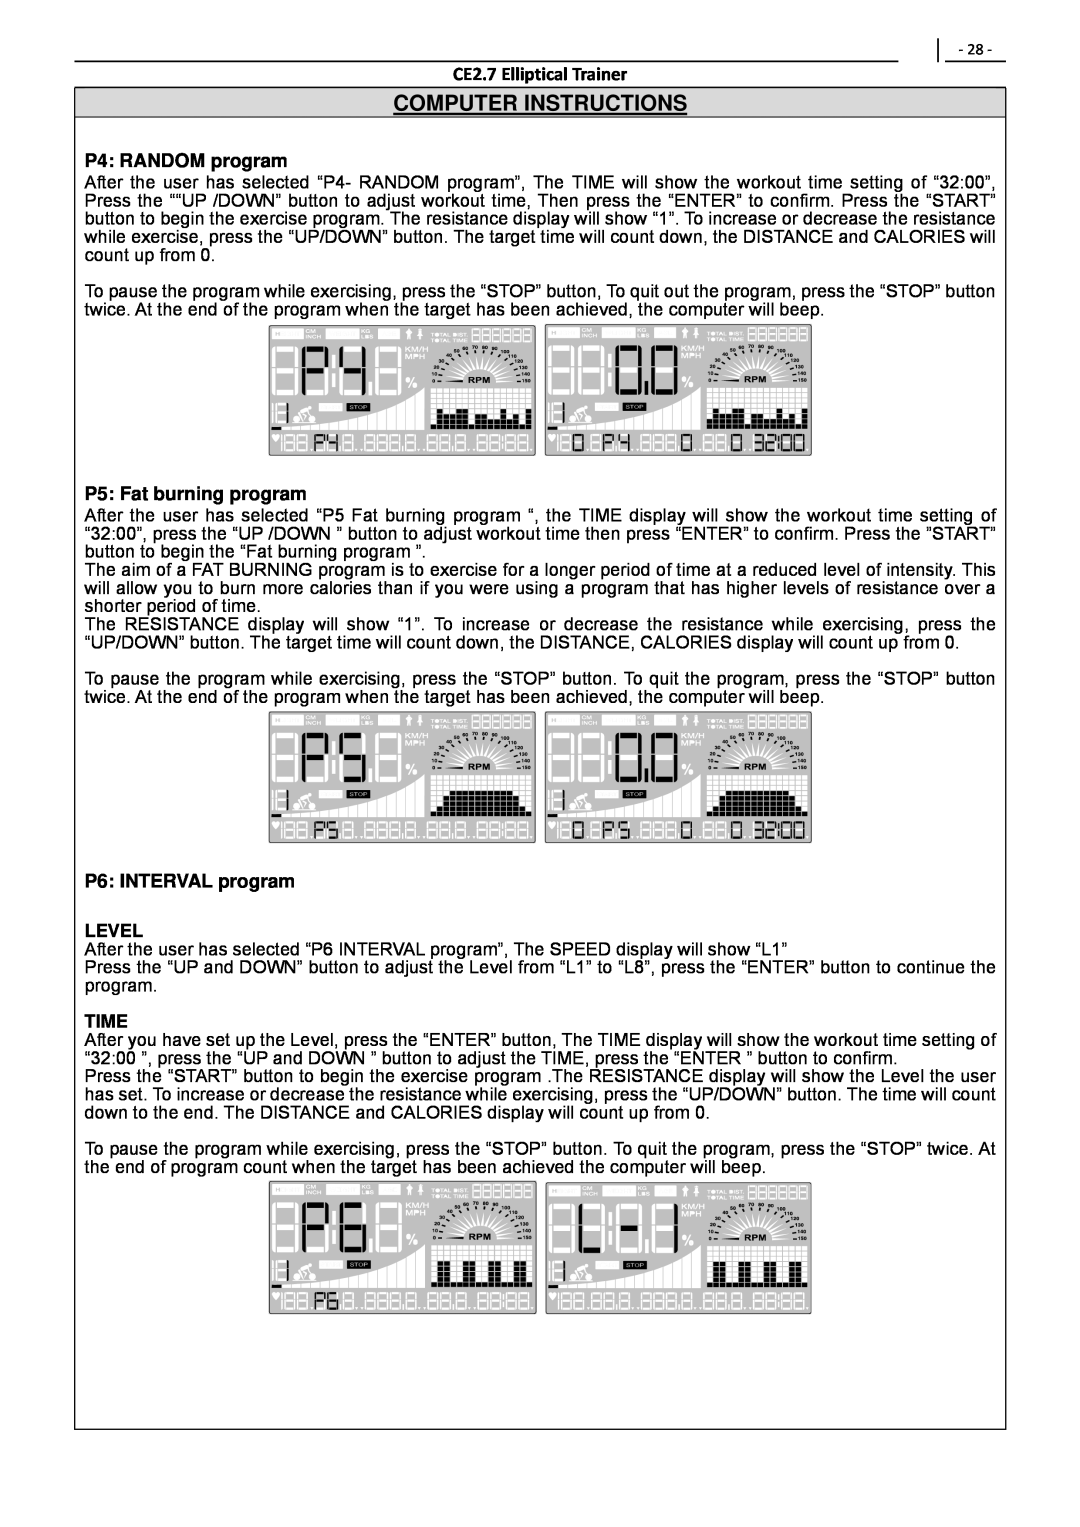 Polar CE2.7 user manual P4 RANDOM program, P5 Fat burning program, P6 INTERVAL program, Computer Instructions, Level, Time 